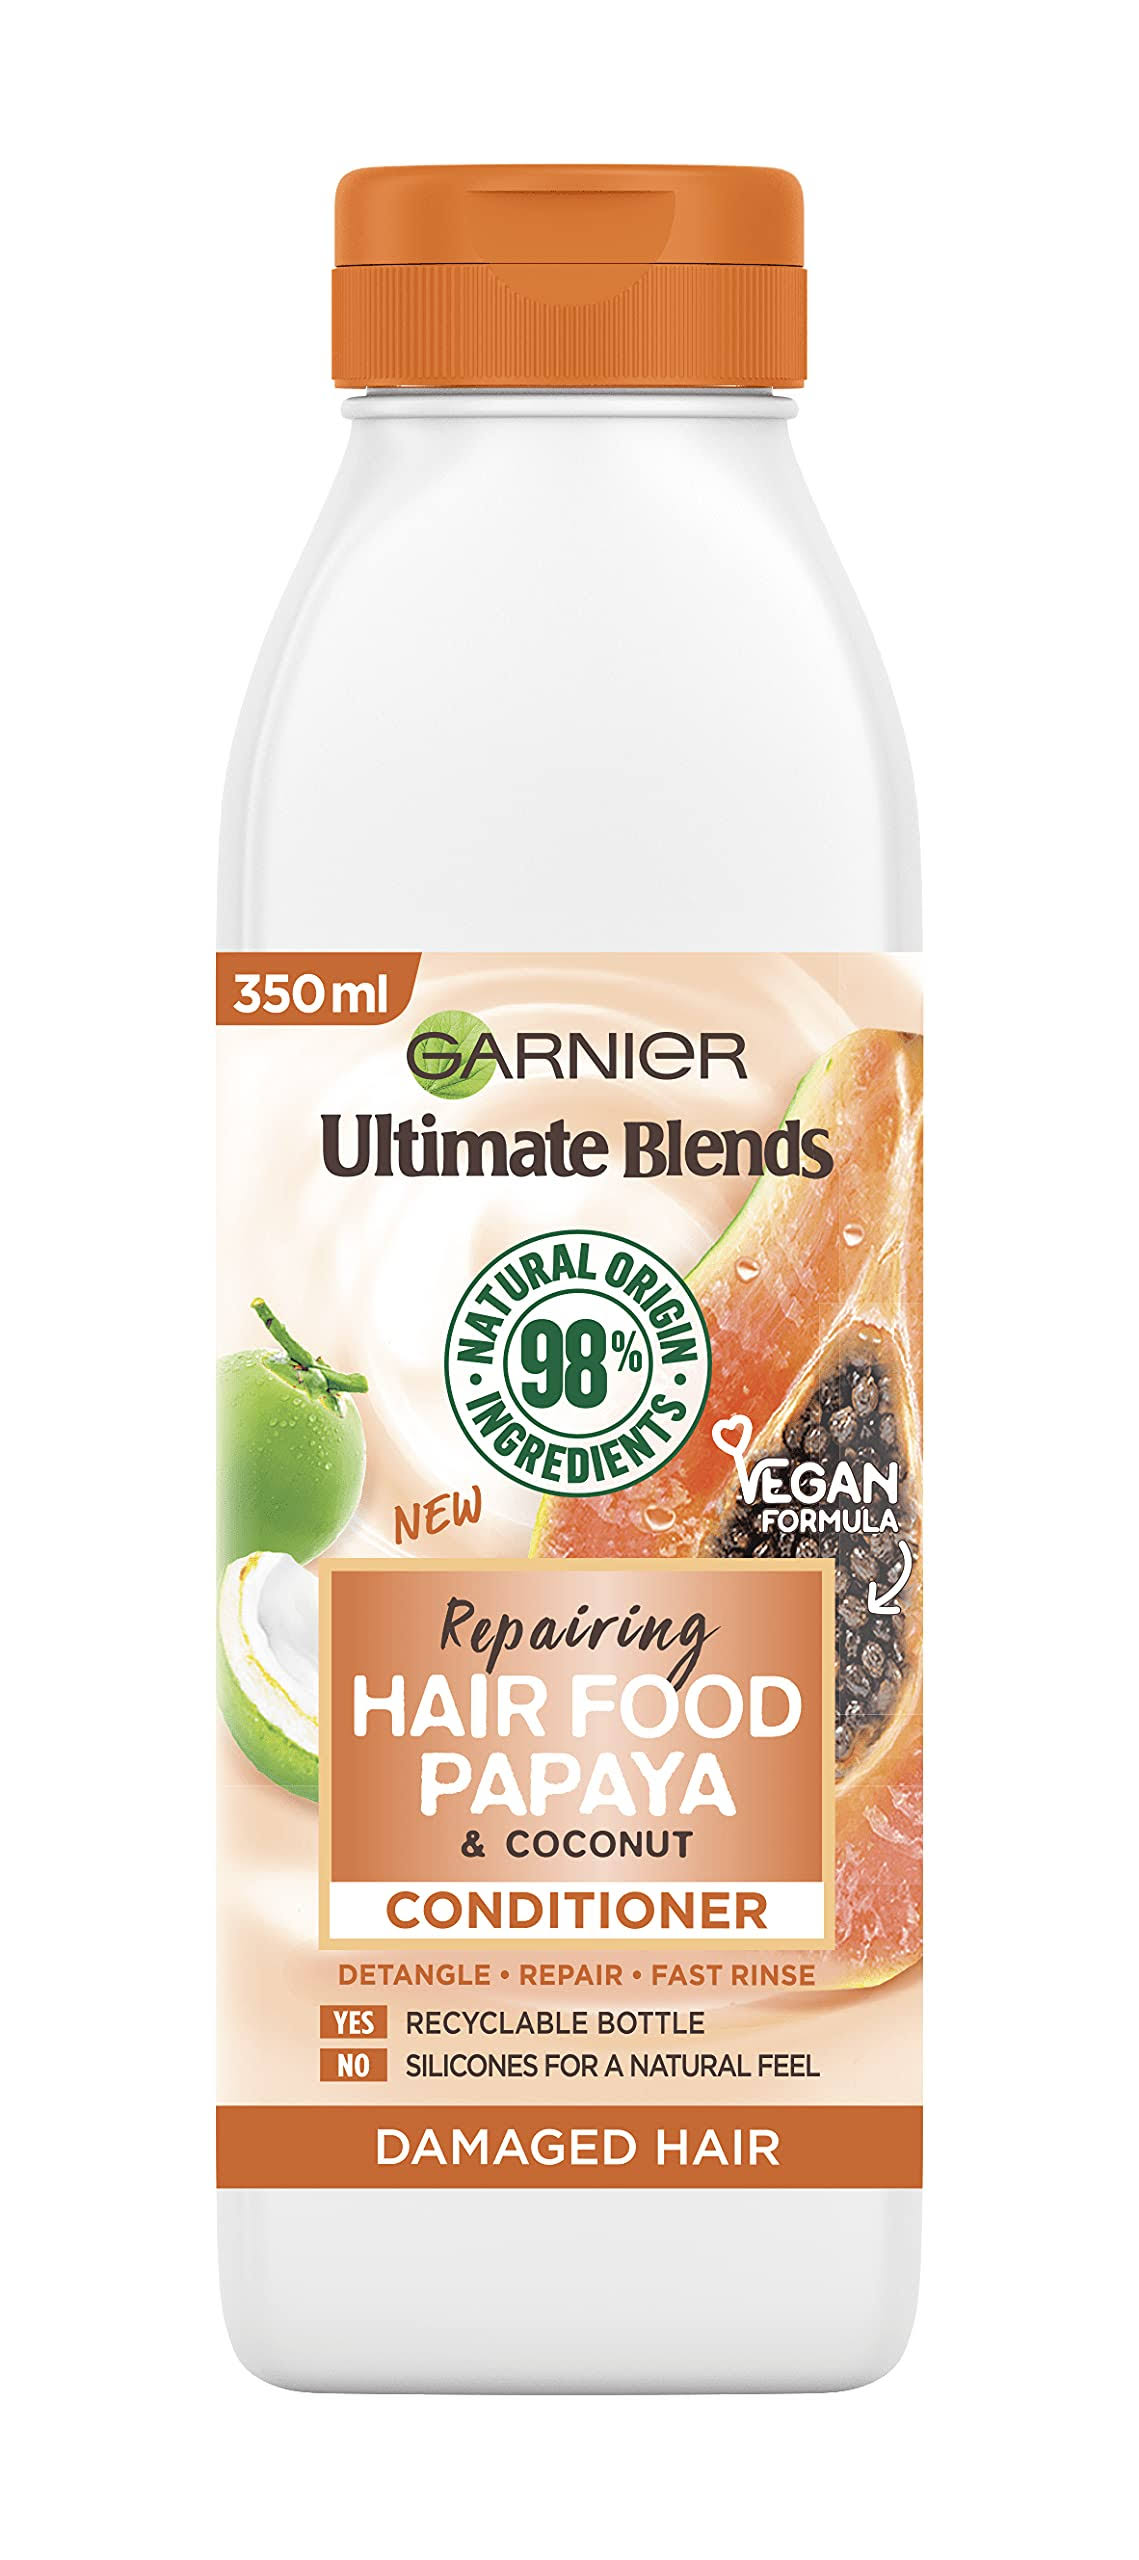 Garnier Ultimate Blends Repairing Hair Food Papaya Conditioner For Damaged Hair - 350ml